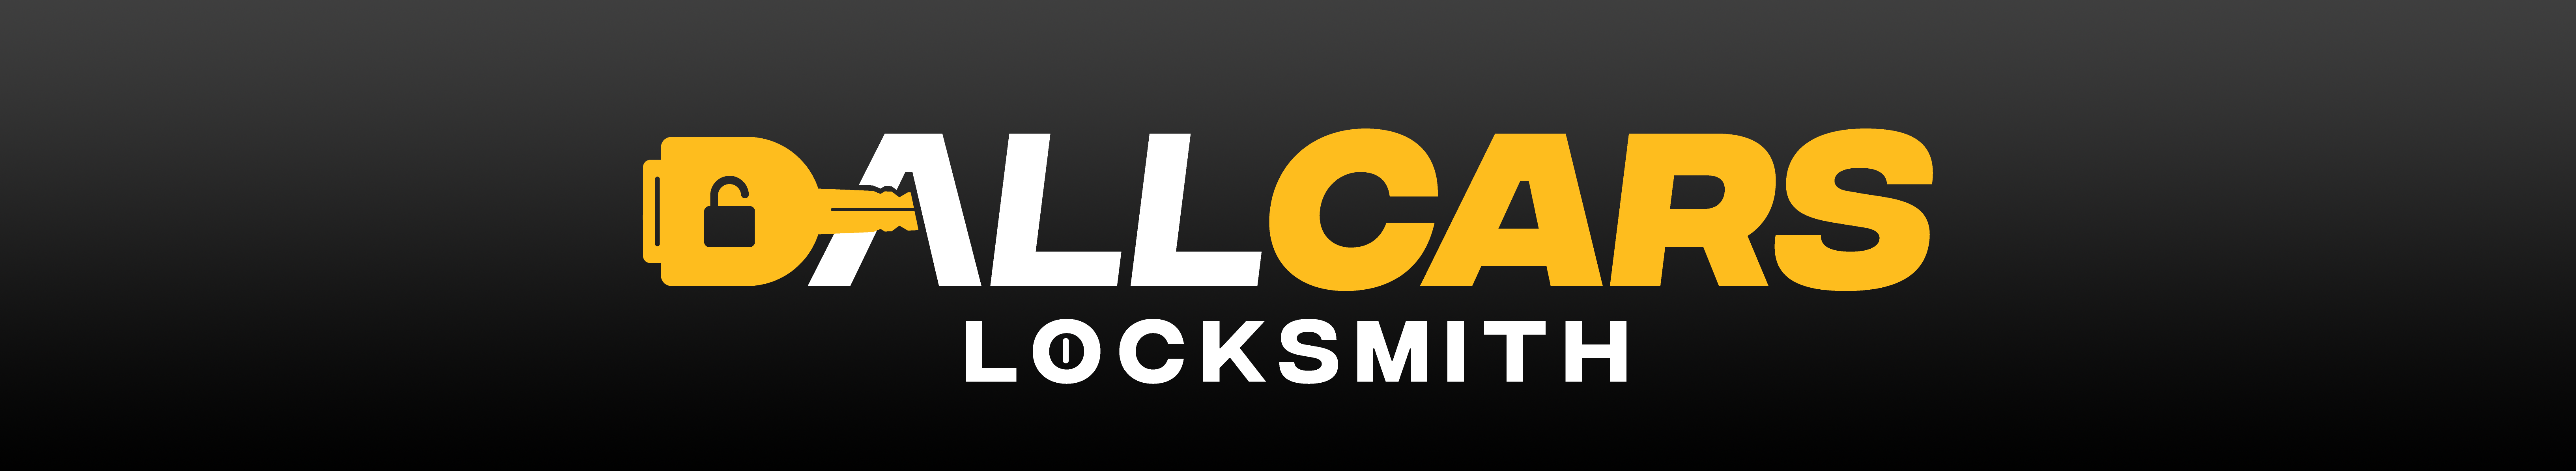 All Cars Locksmith - Emergency Car Locksmith Services 